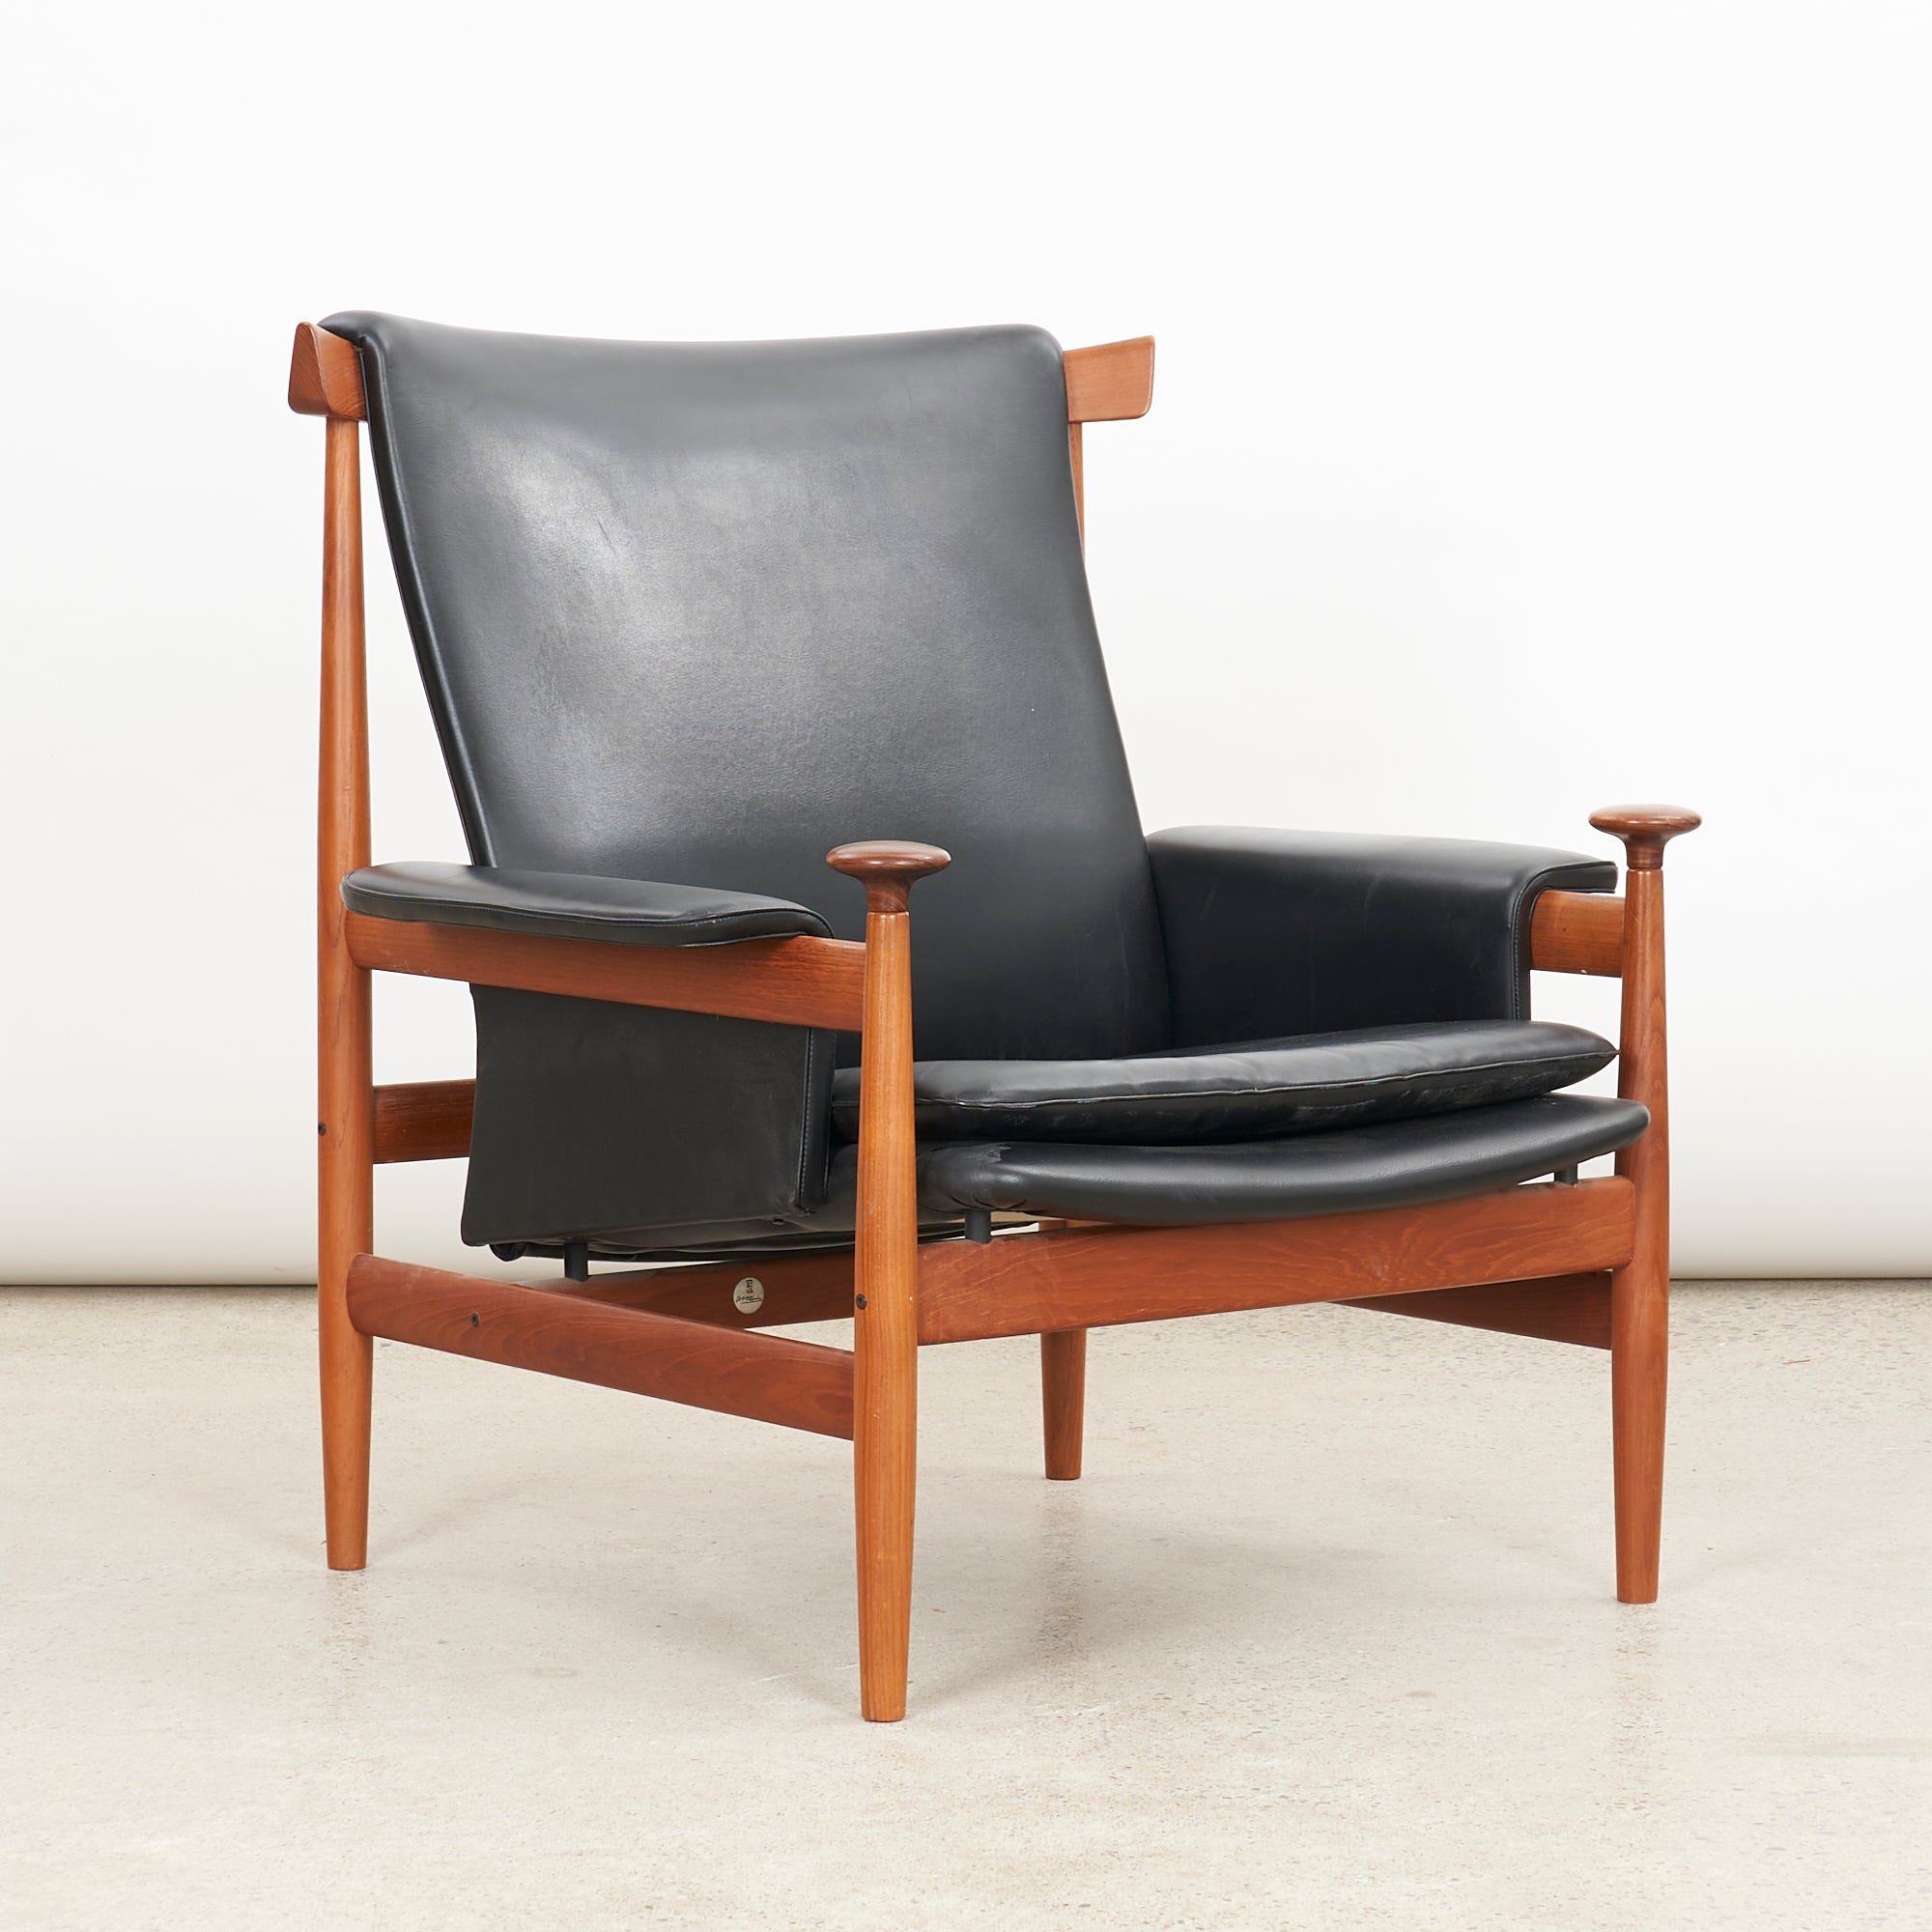 'Bwana' Teak & Leather Lounge Chair & Ottoman by Finn Juhl for France & Søn, Denmark Vintage Furniture Danish Design Scandinavian Modern Mid-century Modern